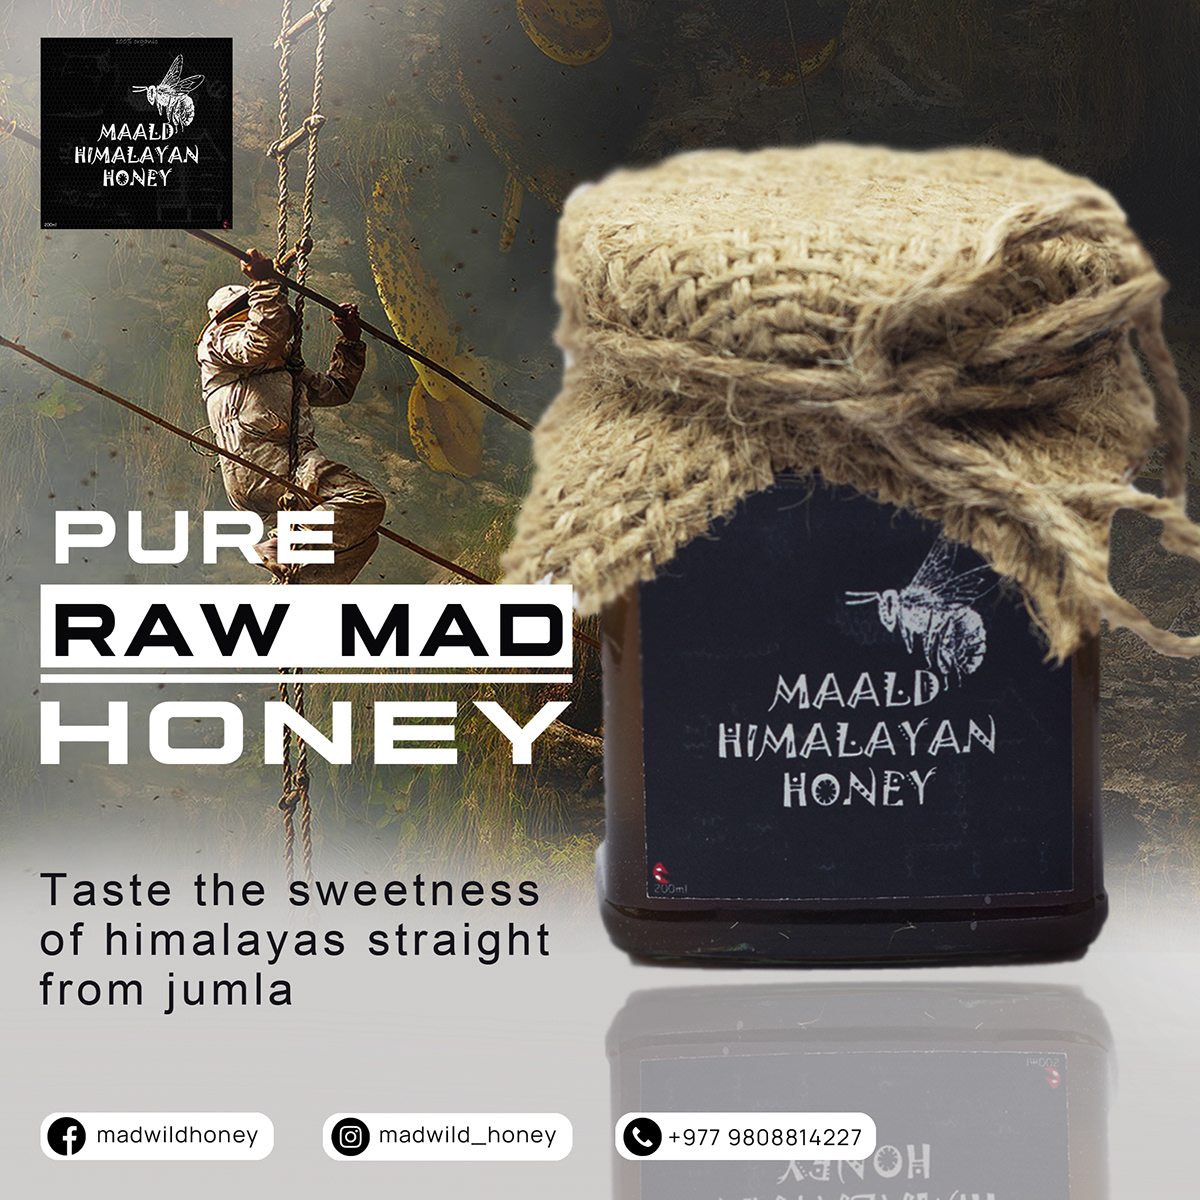 Mad Honey product